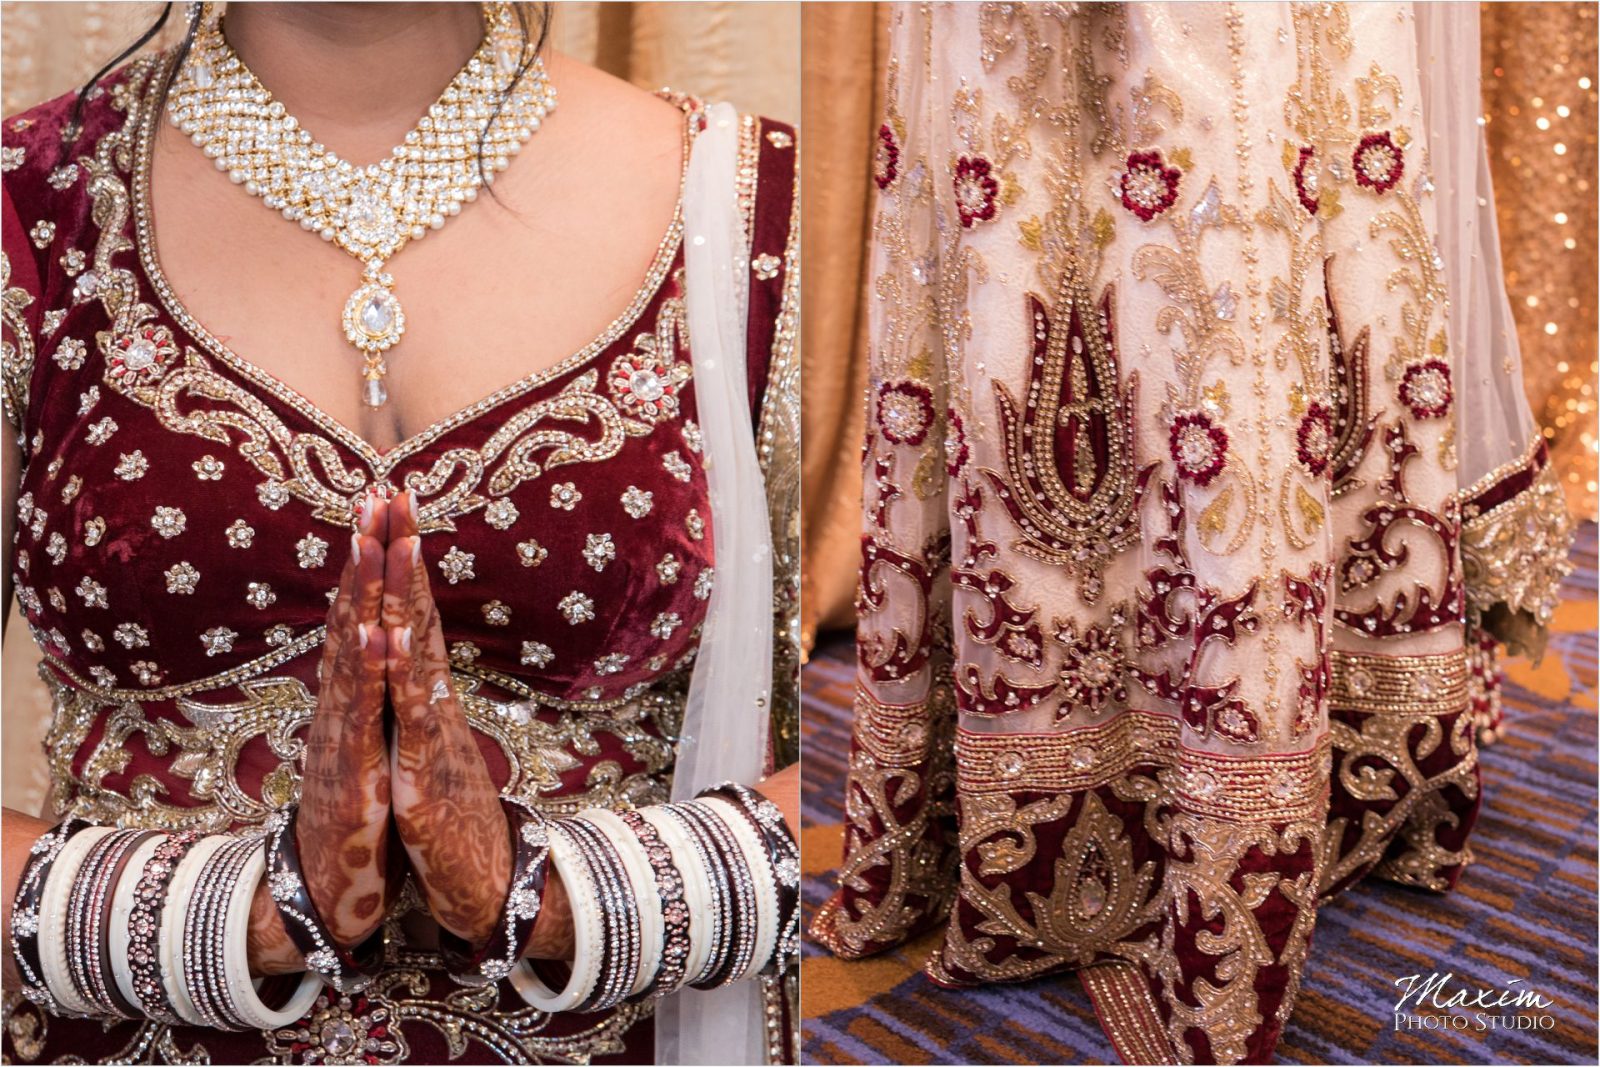 Savannah Center Indian Wedding Ceremony Reception preparations